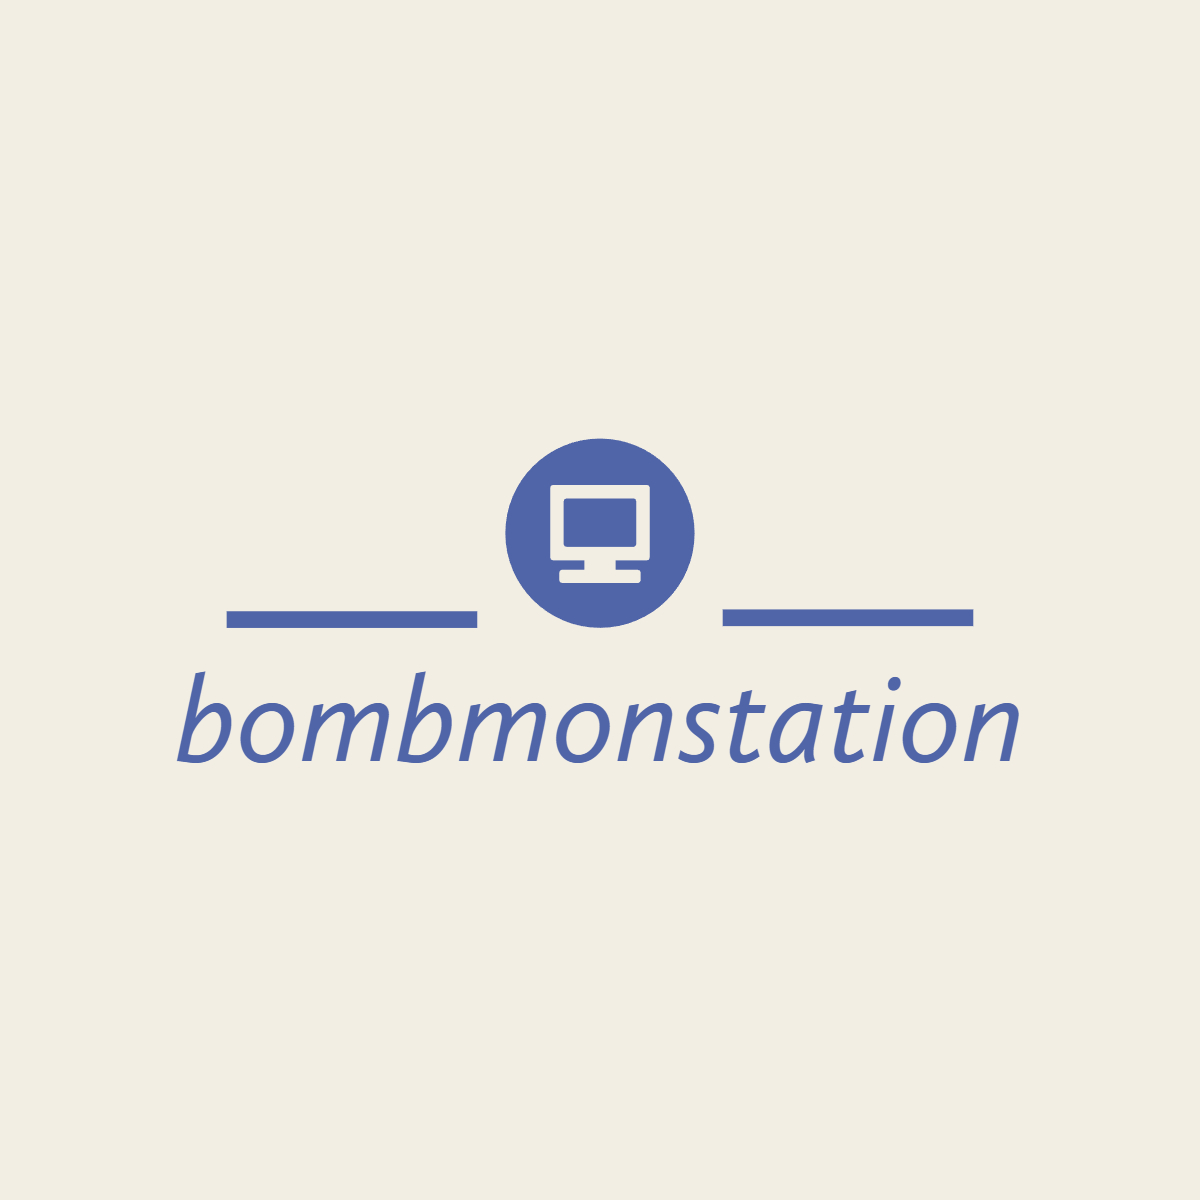 Bombmon Station Limited